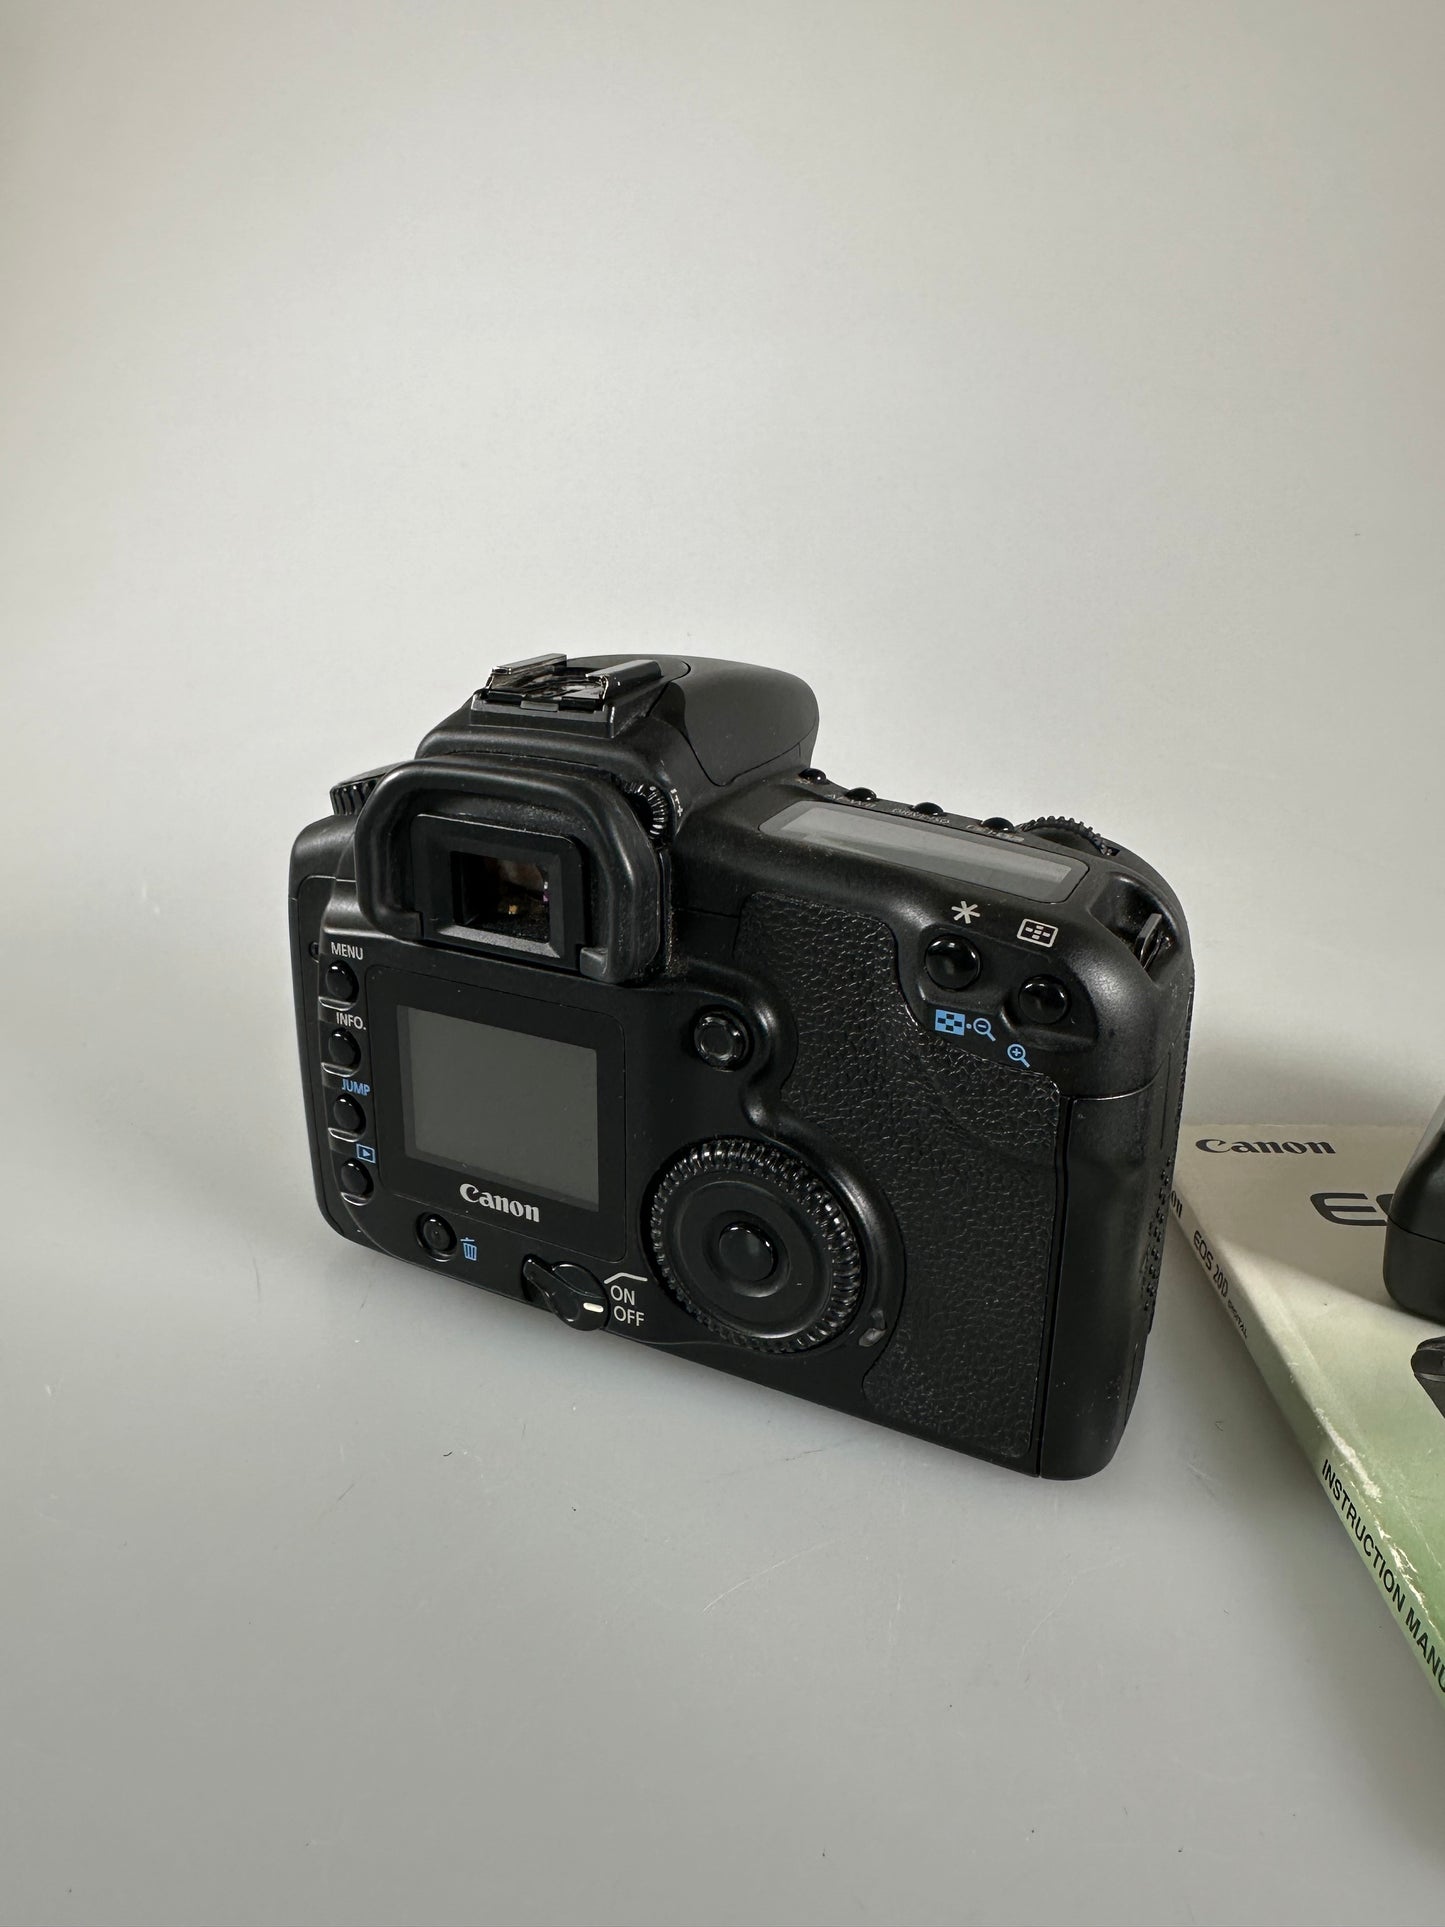 Canon 20D Digital SLR Camera Body